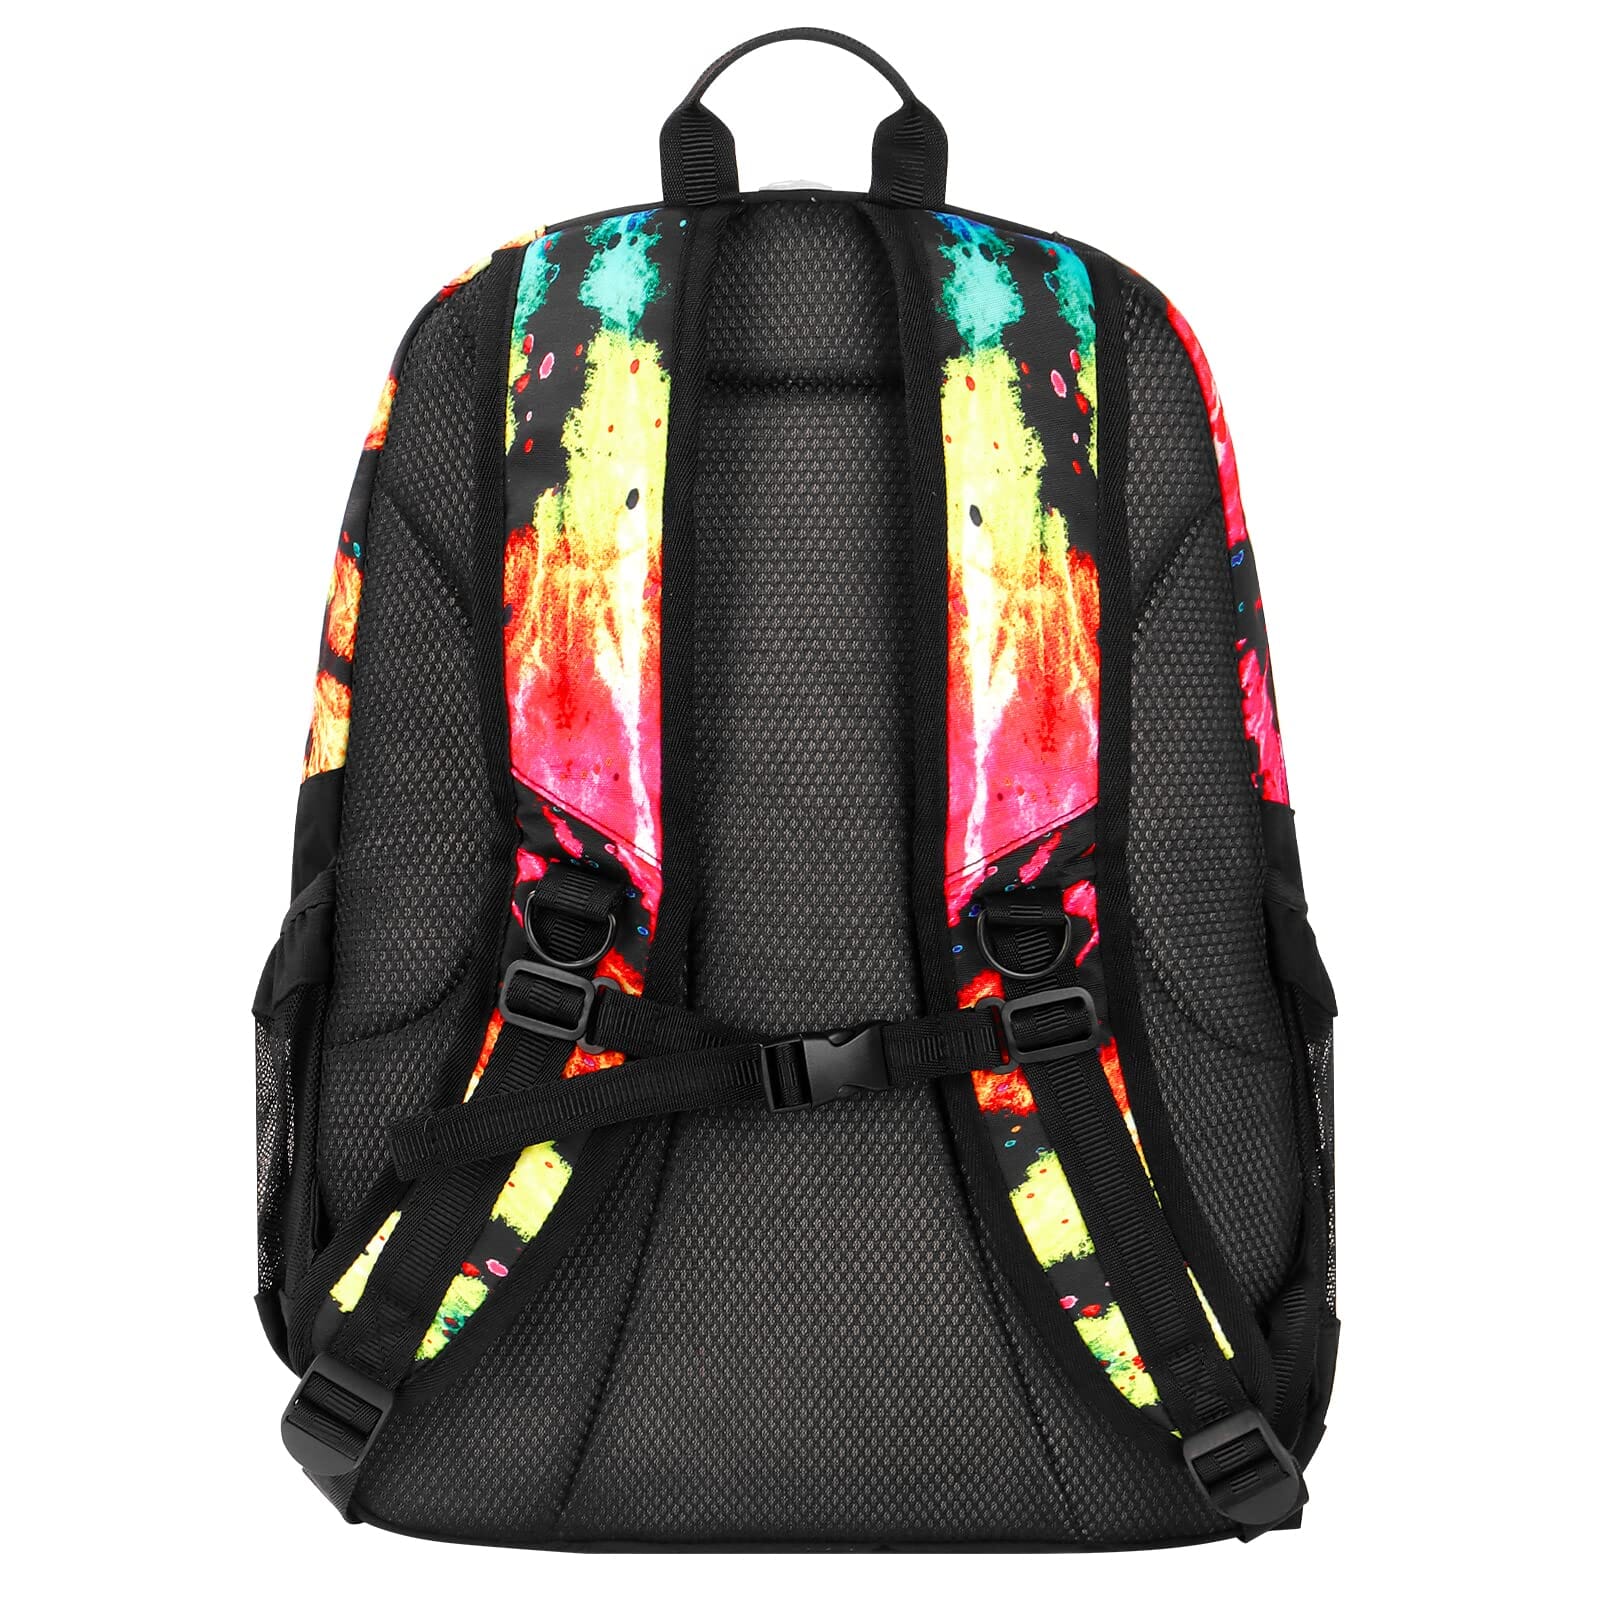 Choco Mocha Tie Dye Backpack for Teen Girls, Travel School Backpack for Kids Middle School Large Bookbag 18 Inch, Black chocomochakids 